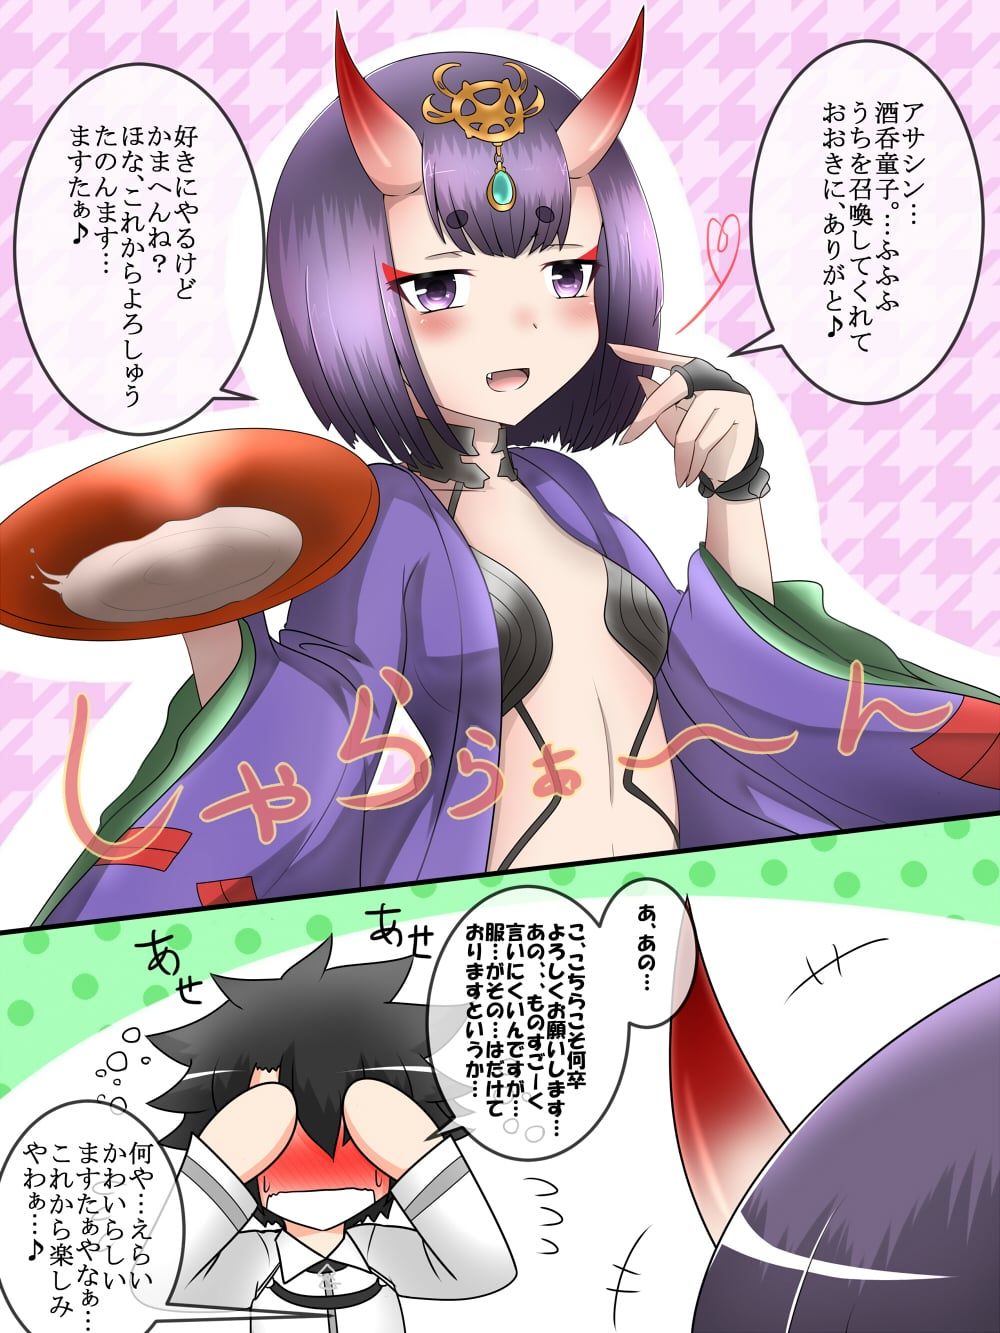 [FateGO] cute MoE shuten-dōji erotic images part 2 7